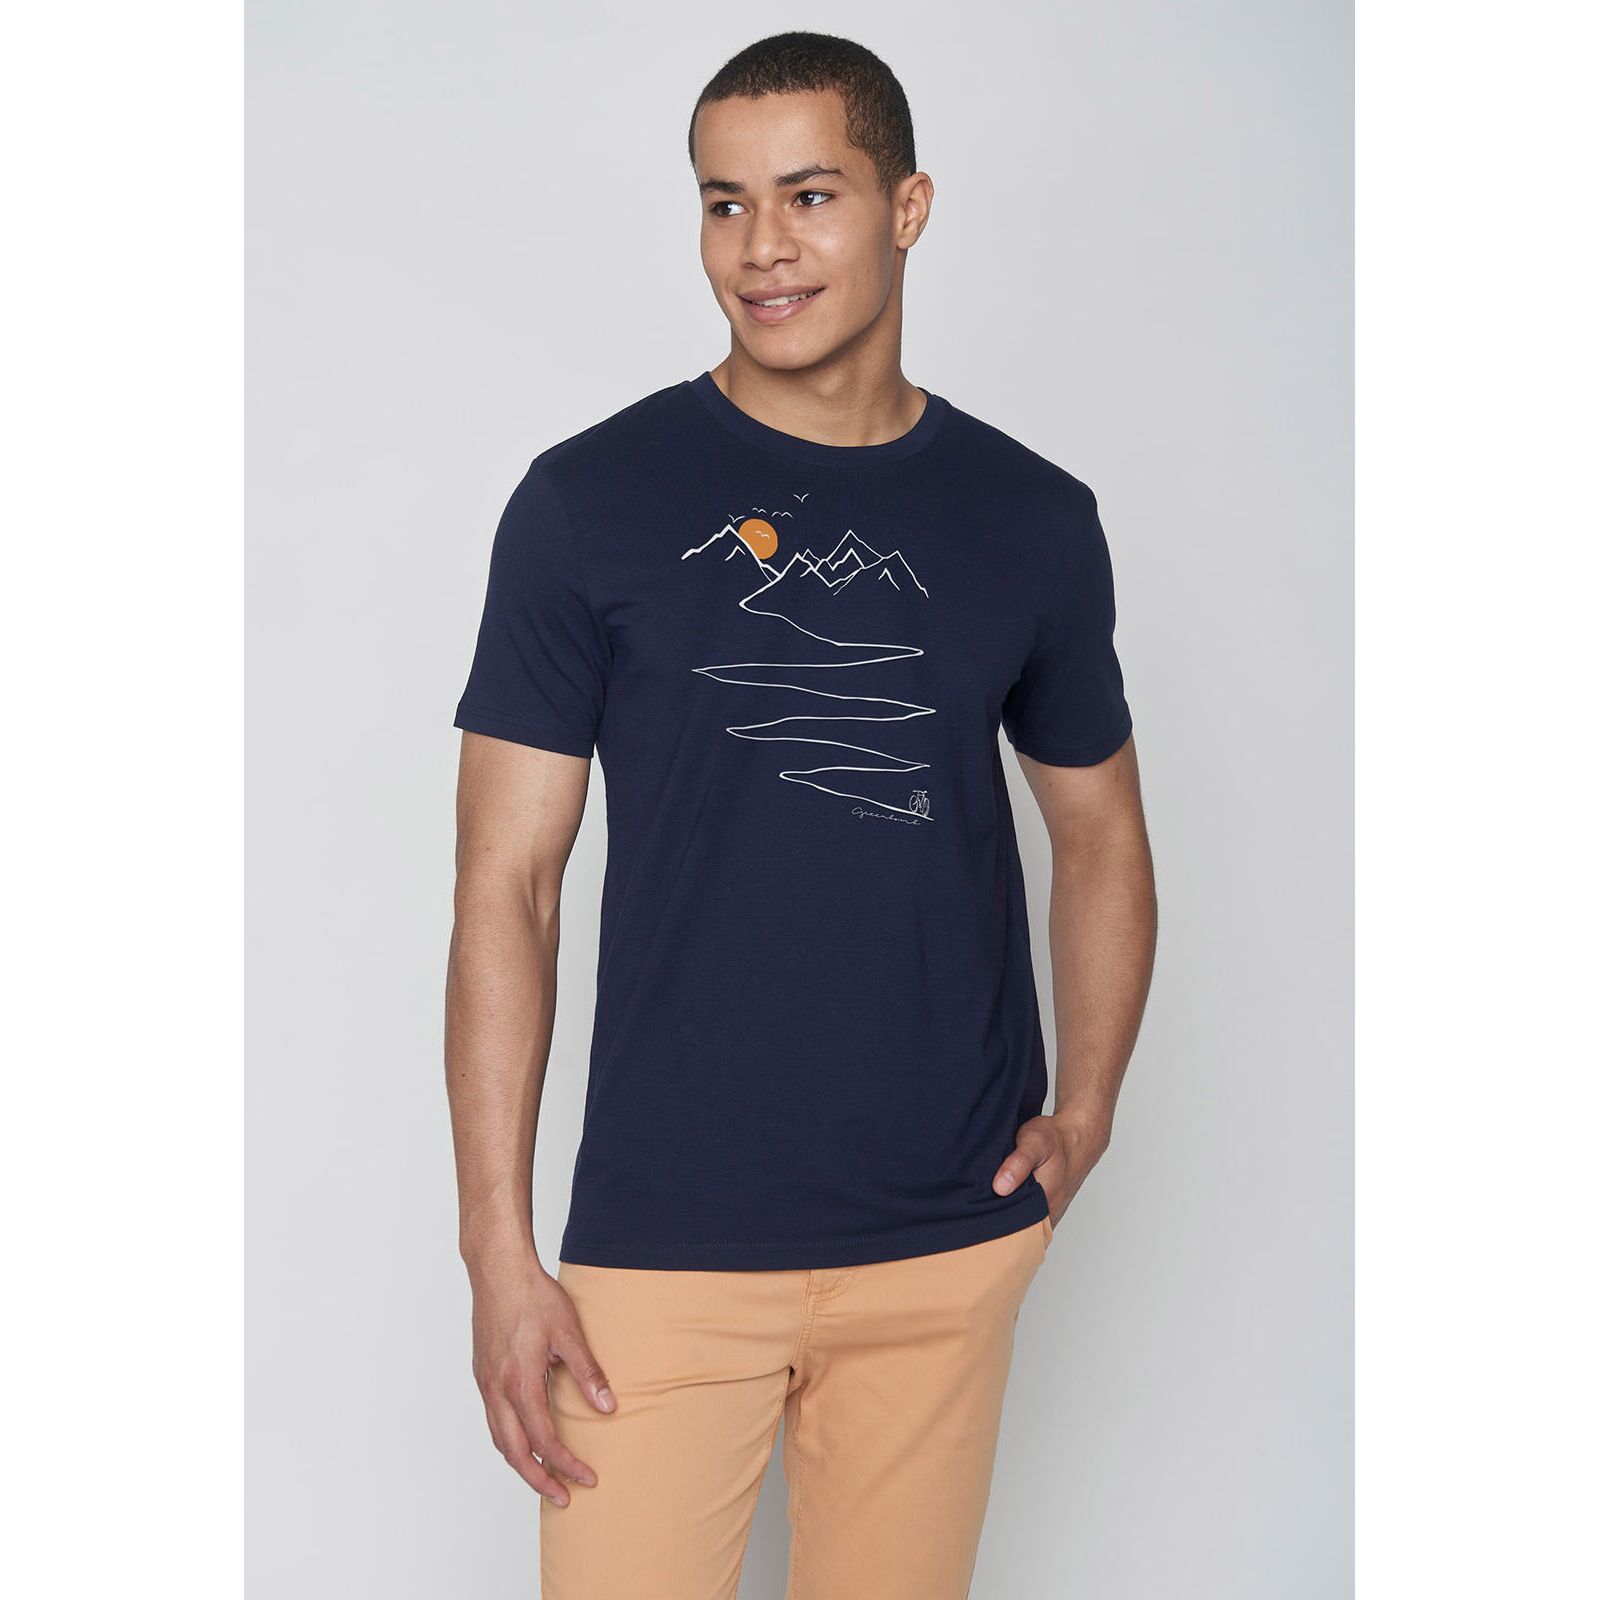 GREENBOMB Herren T-Shirt BIKE PATH Guide navy